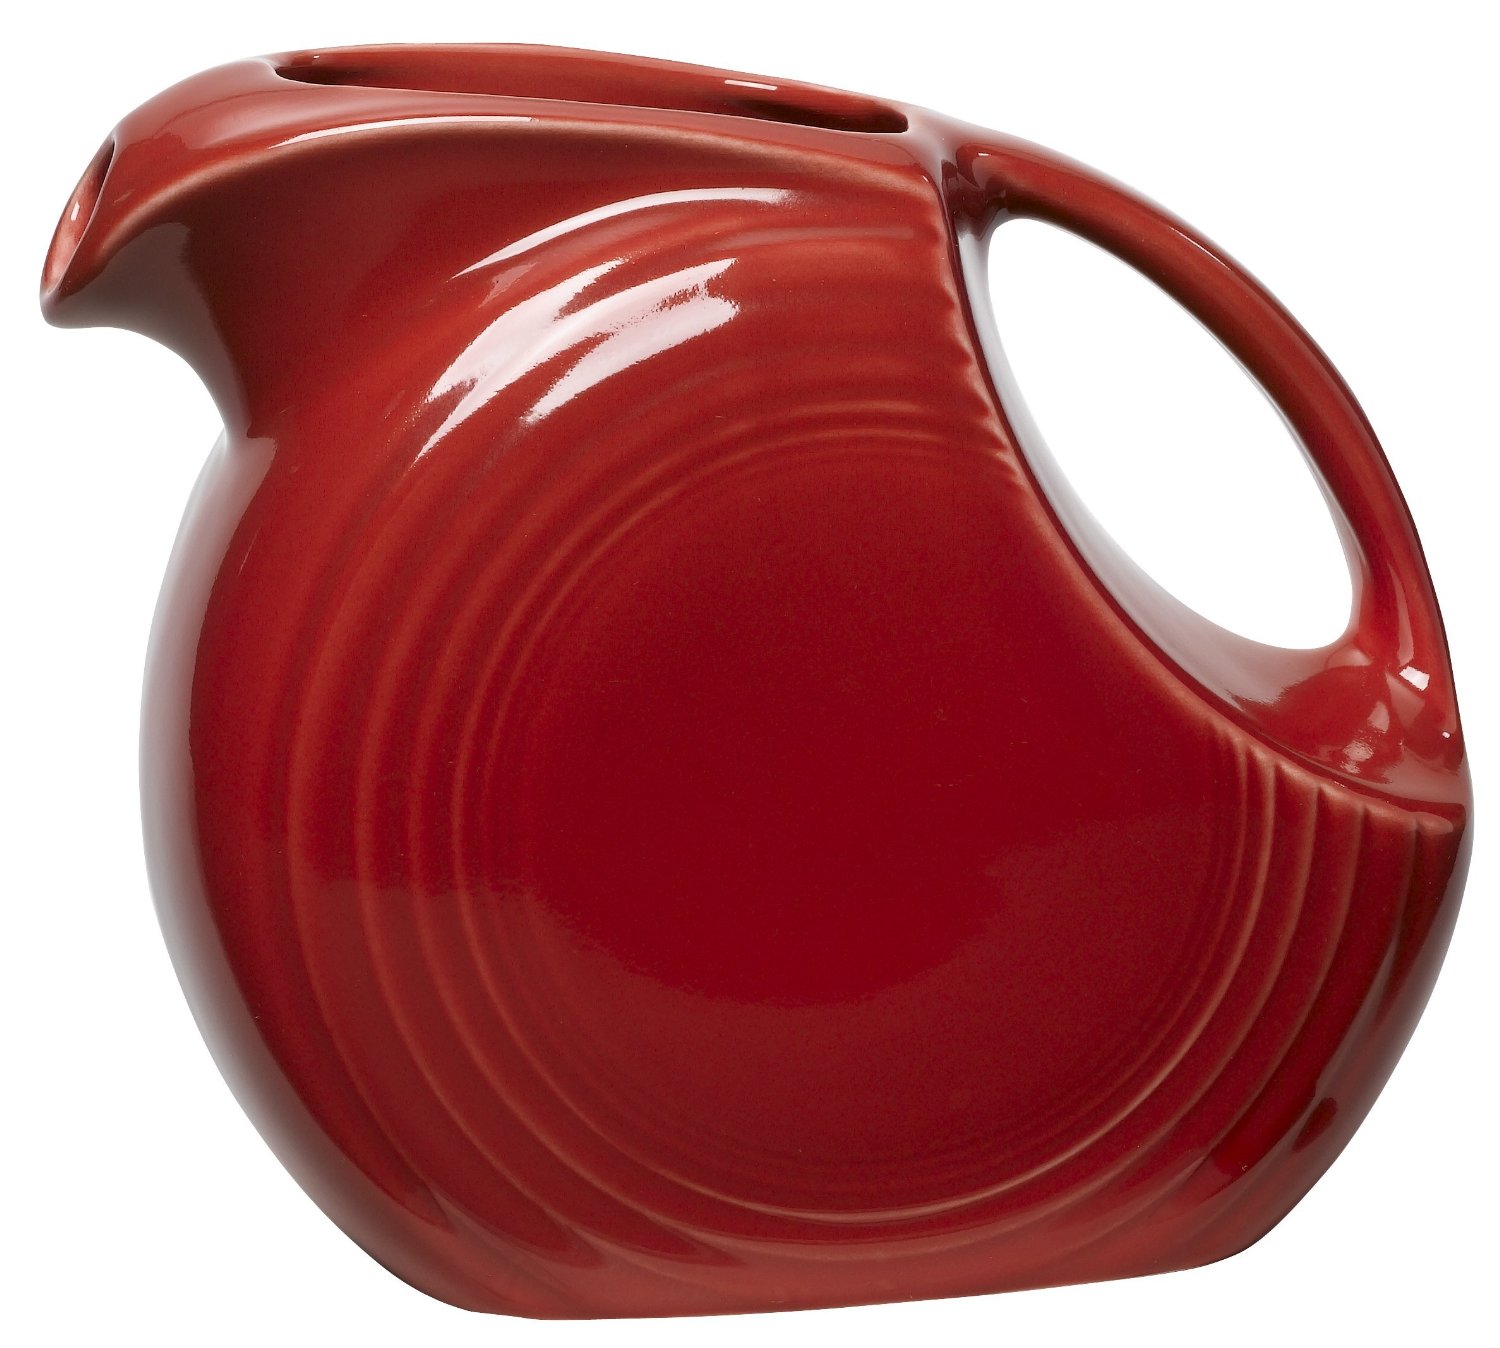 red Fiestaware pitcher